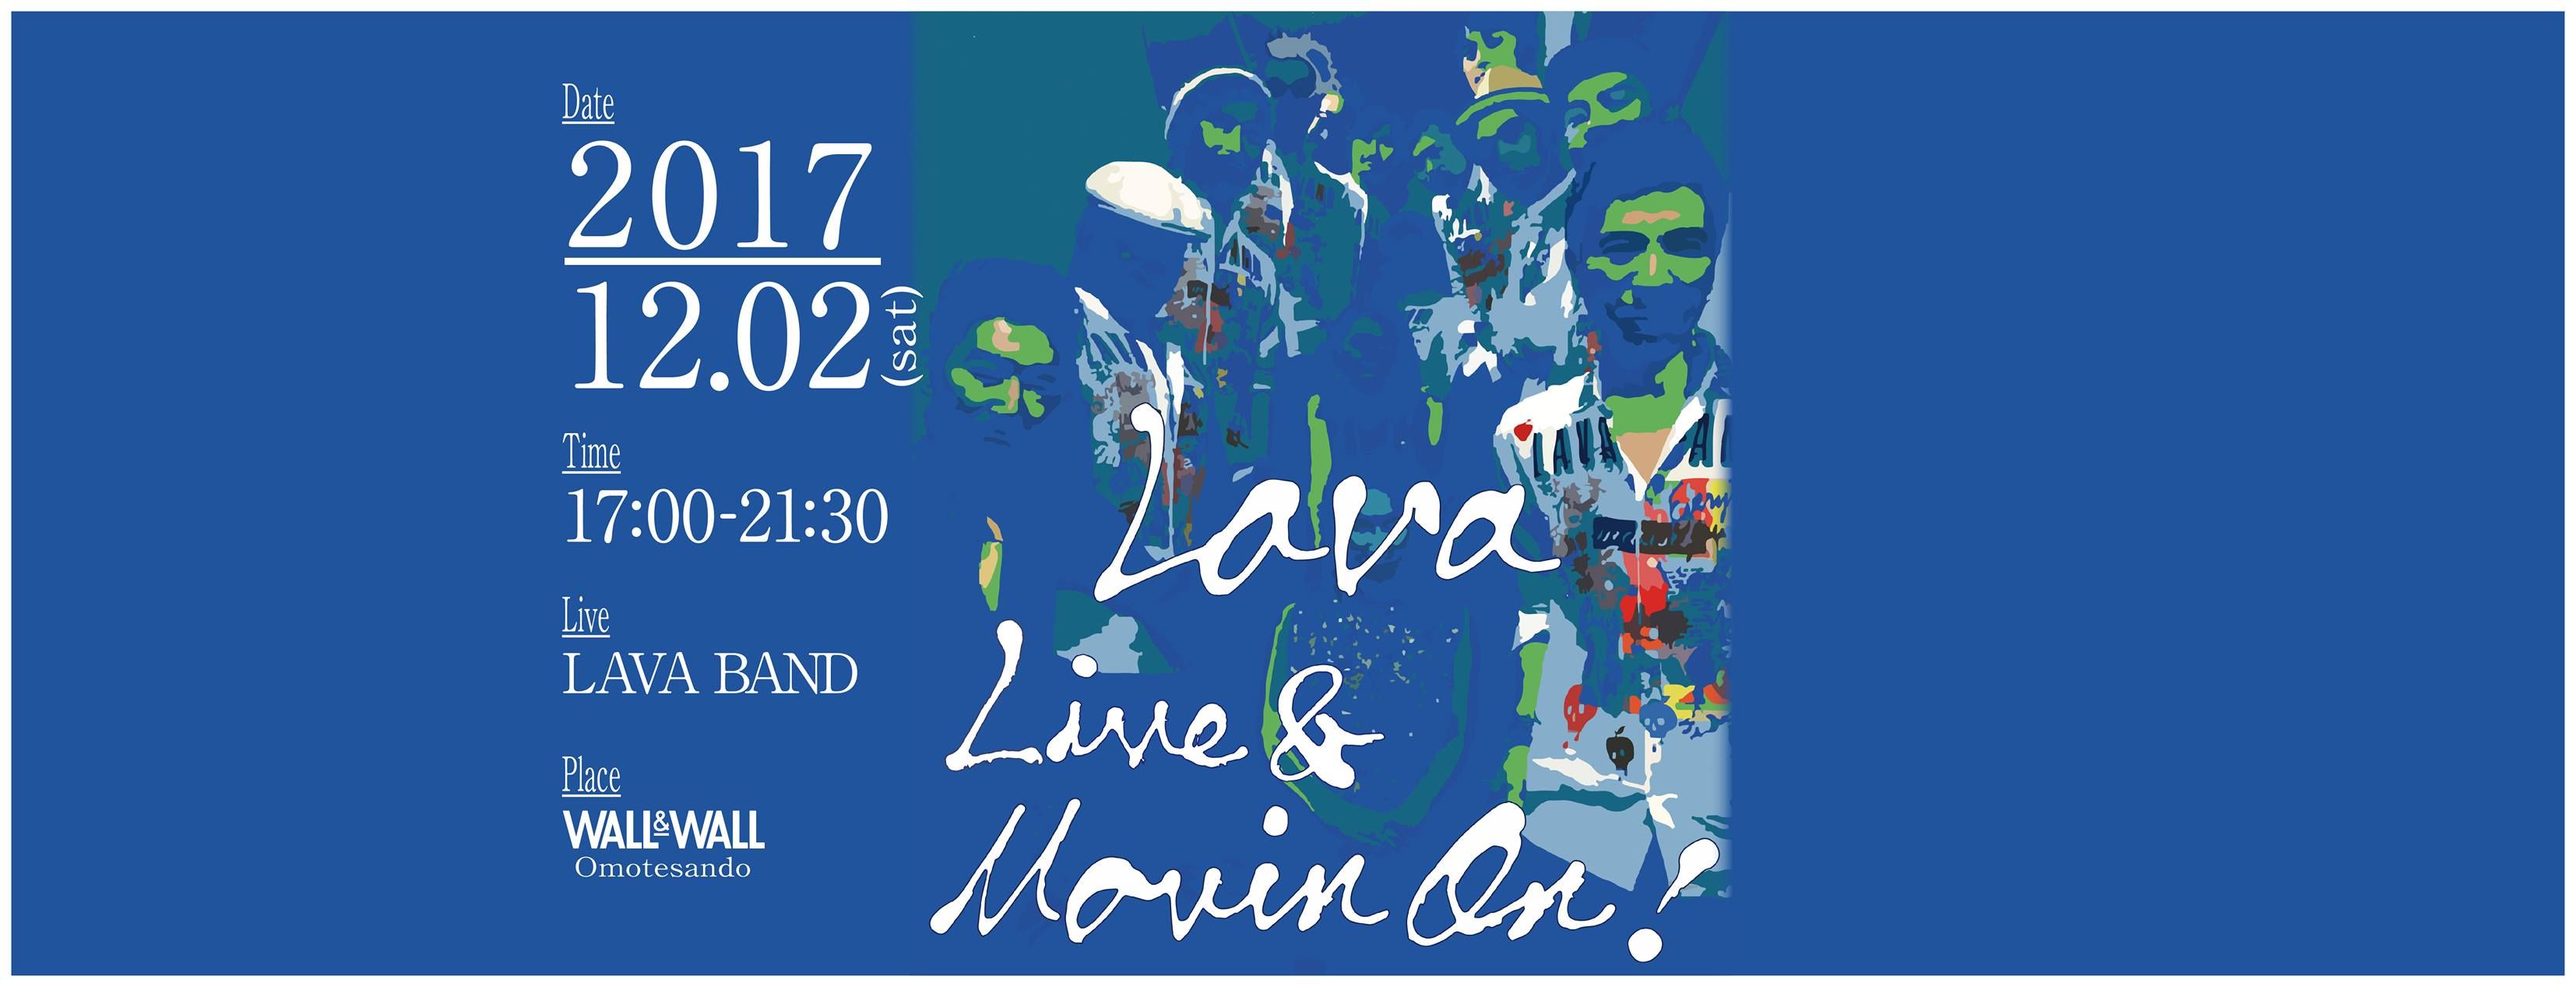 LAVA Presents “Live & Movin' On ! “